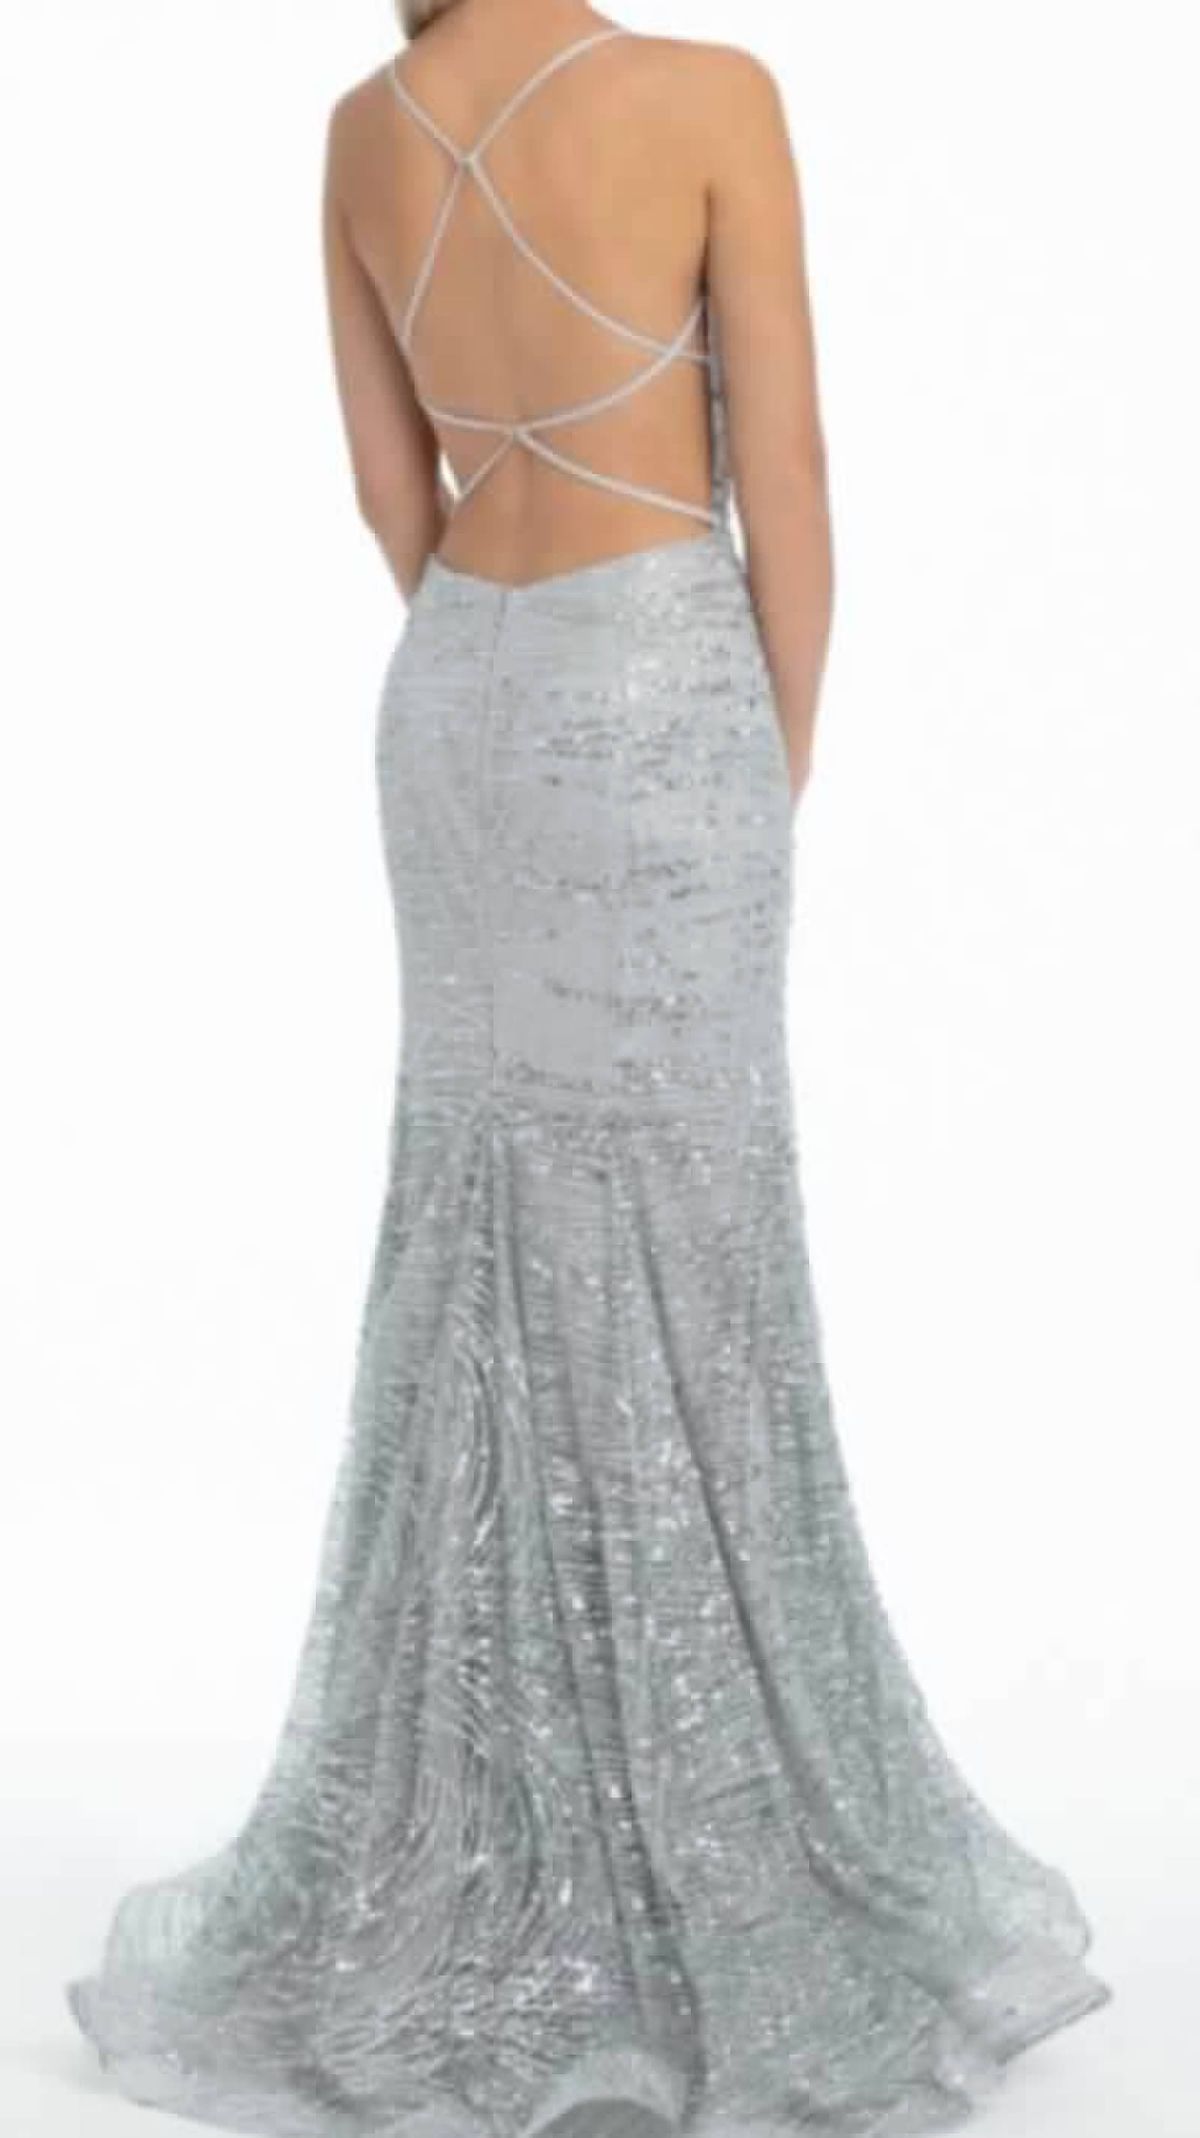 Camille La Vie Size 0 Plunge Silver Mermaid Dress on Queenly